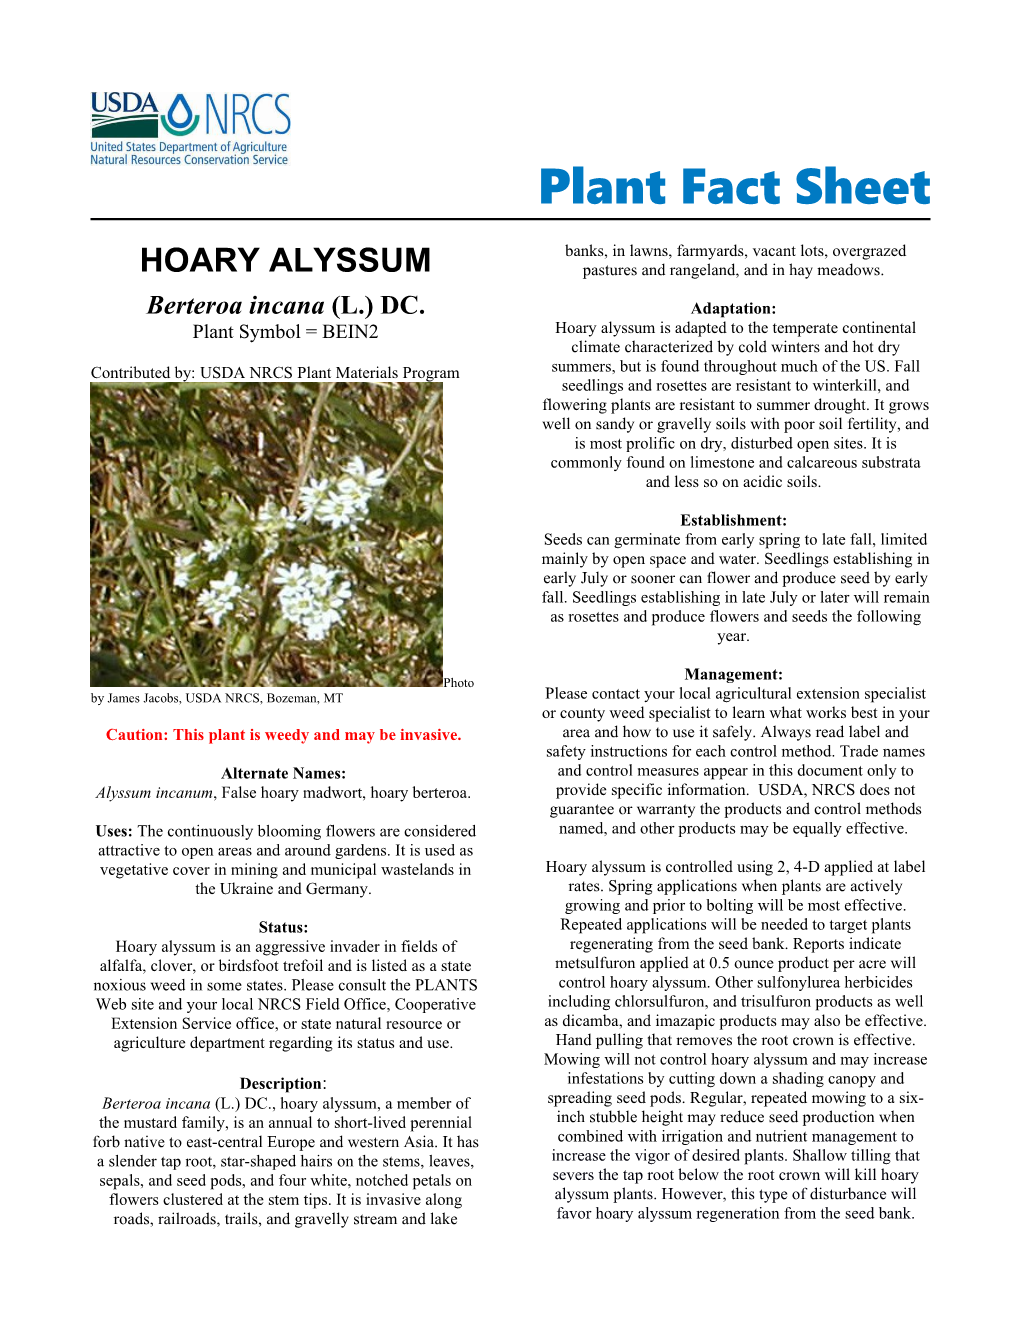 Hoary Alyssum Plant Fact Sheet